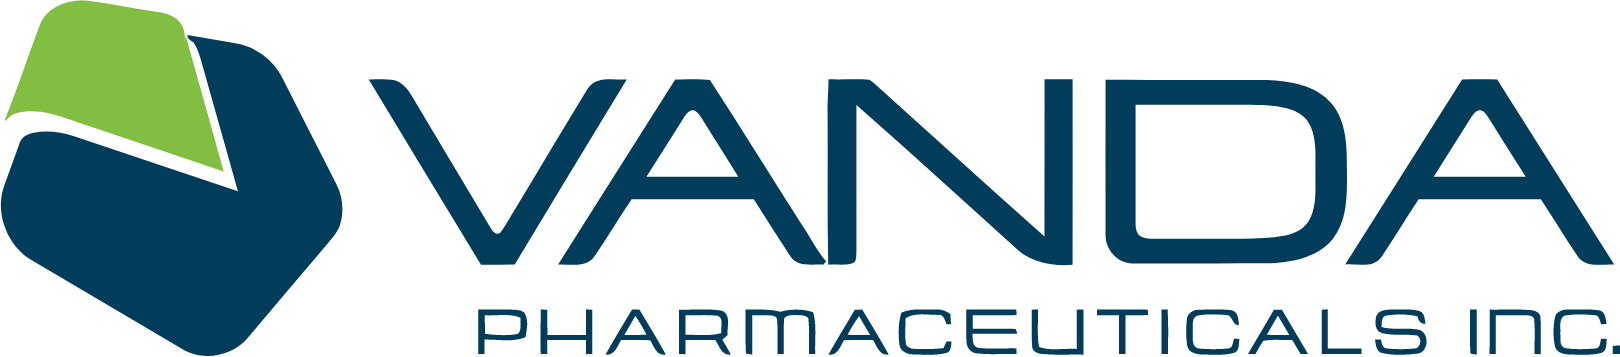 Vanda Pharmaceuticals logo large (transparent PNG)